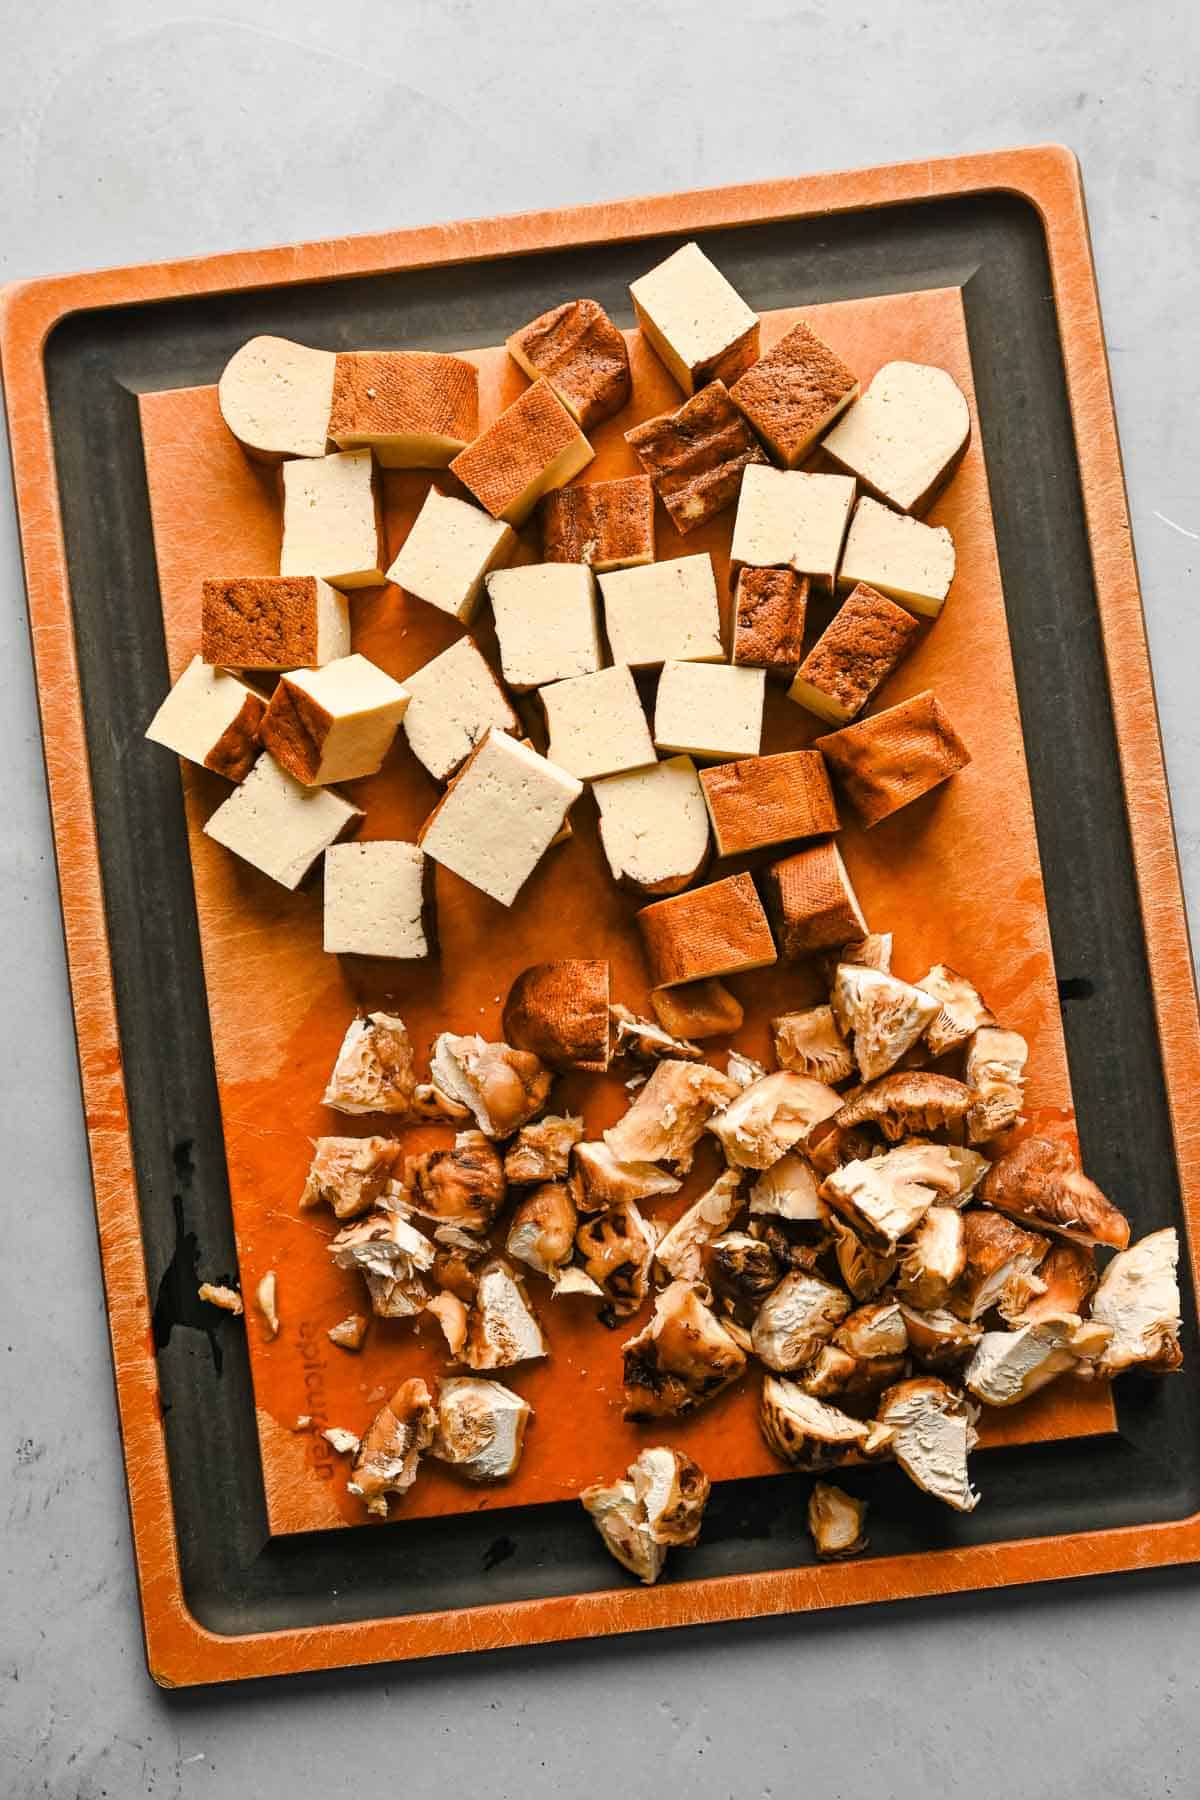 Chopped tofu and shiitake mushrooms on a wooden cutting board.